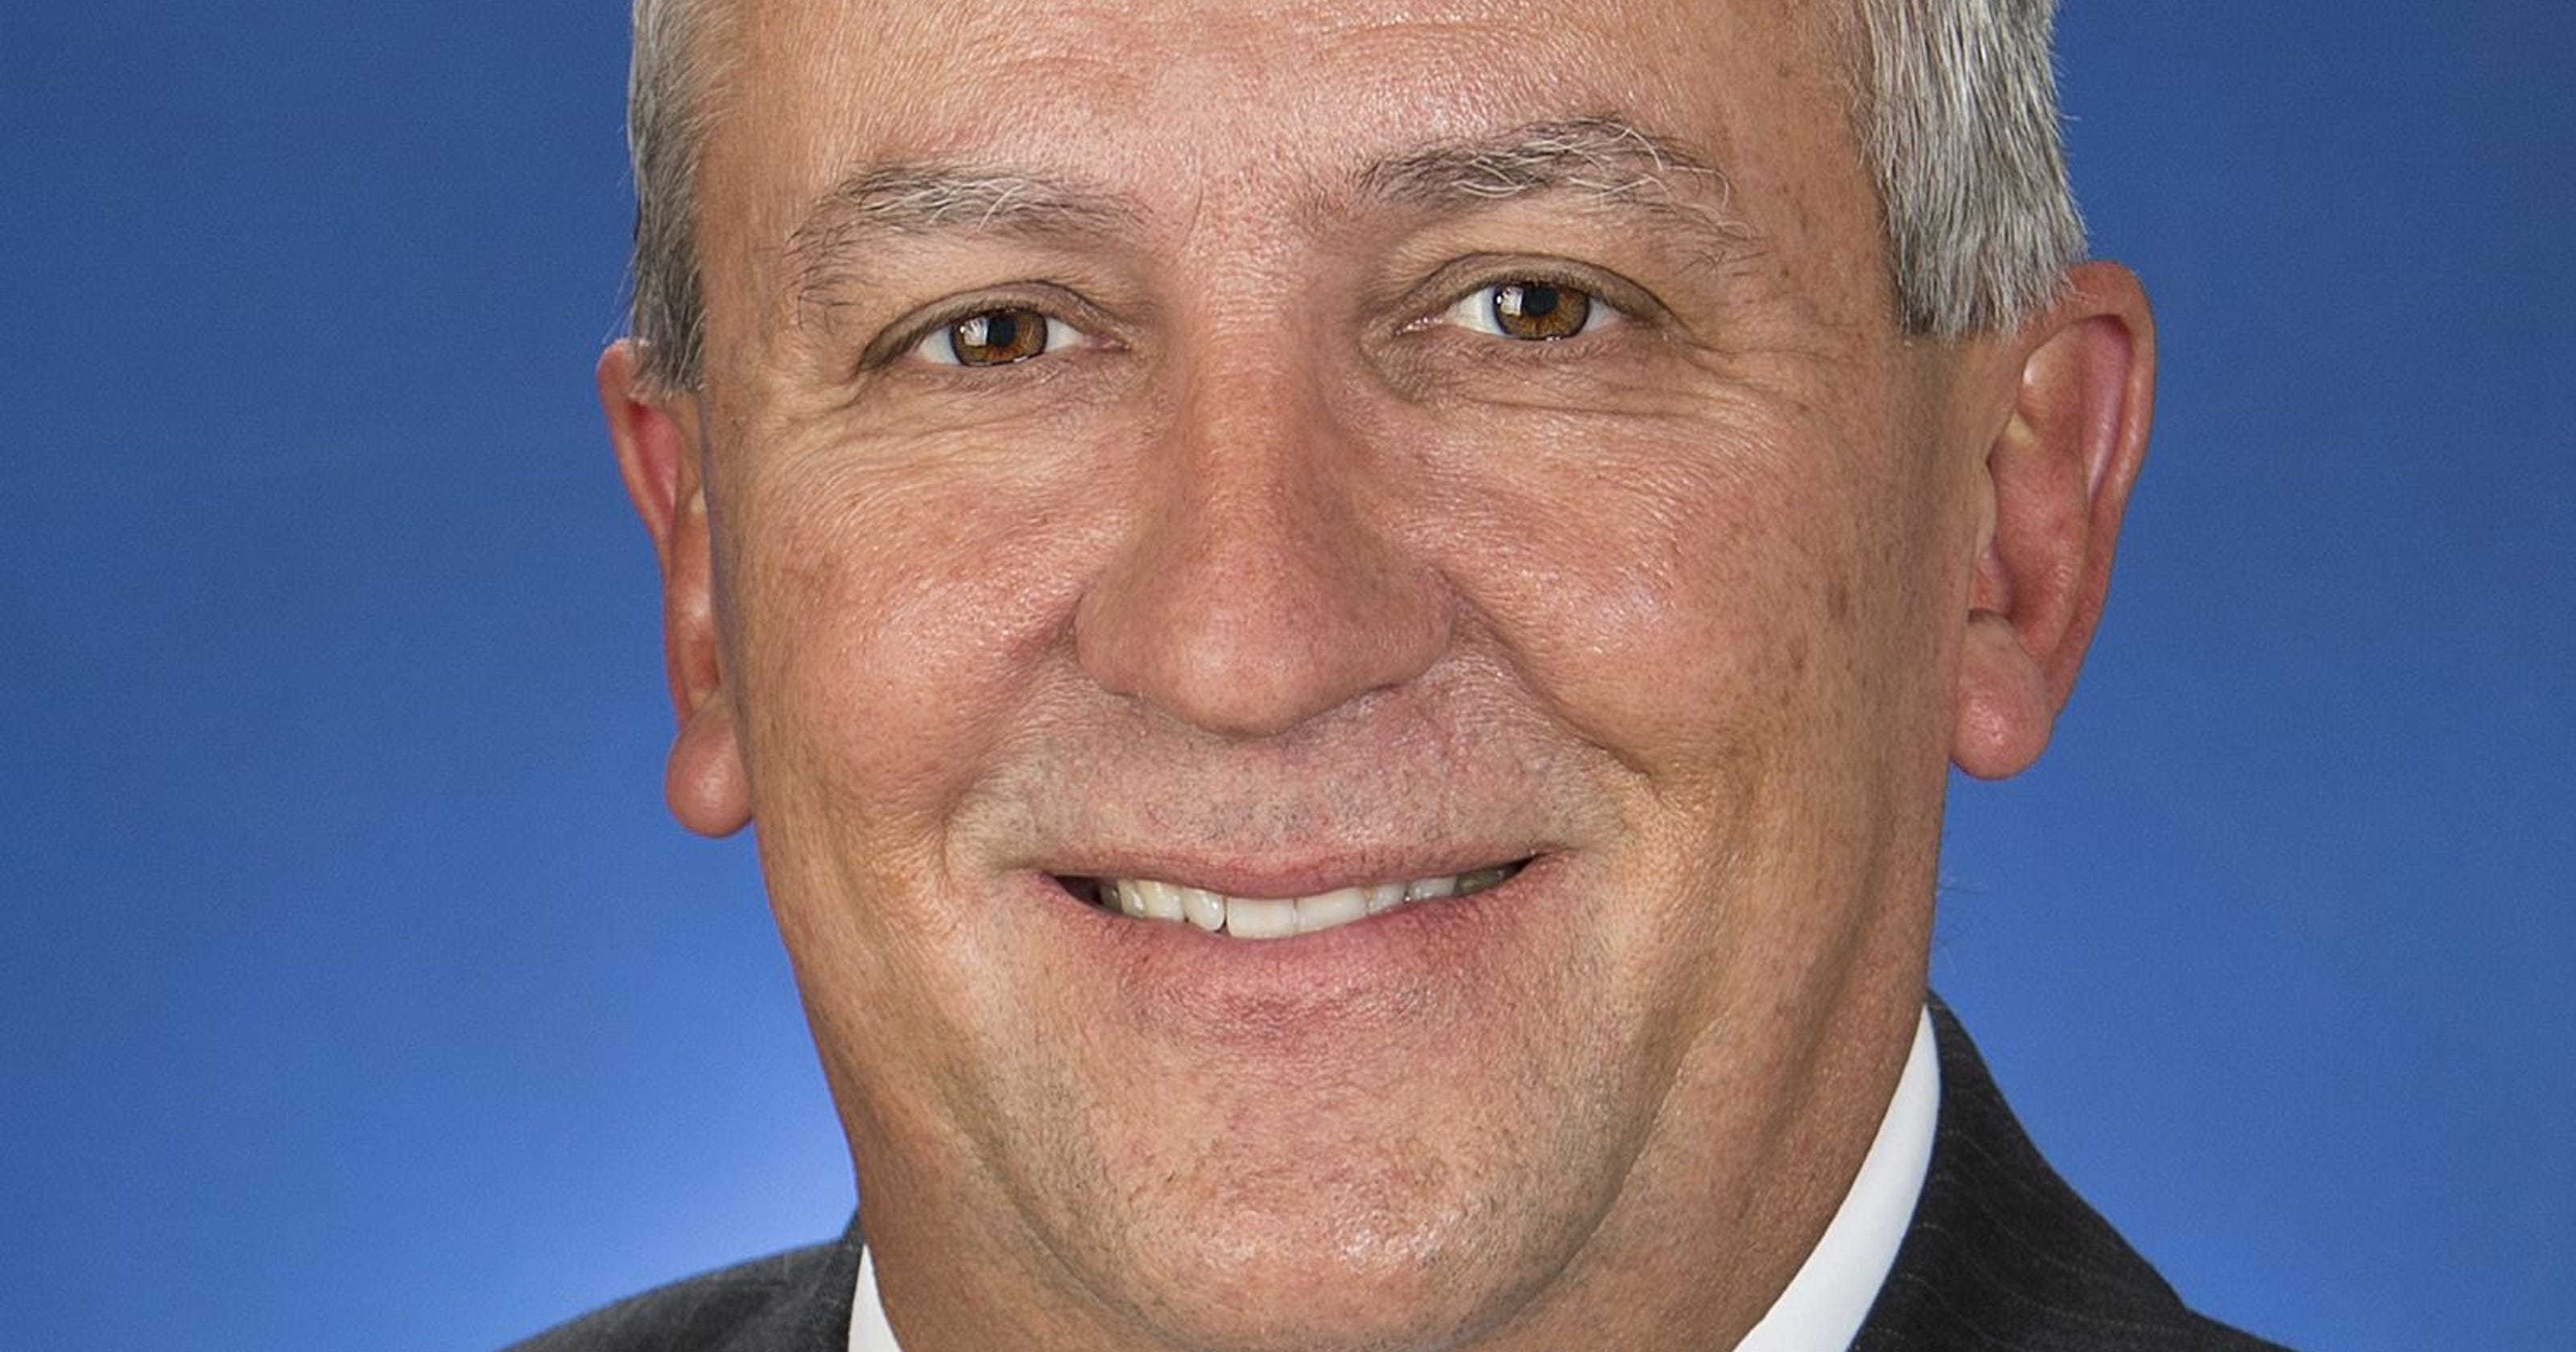 Republican Pennsylvania state senator Mike Folmer